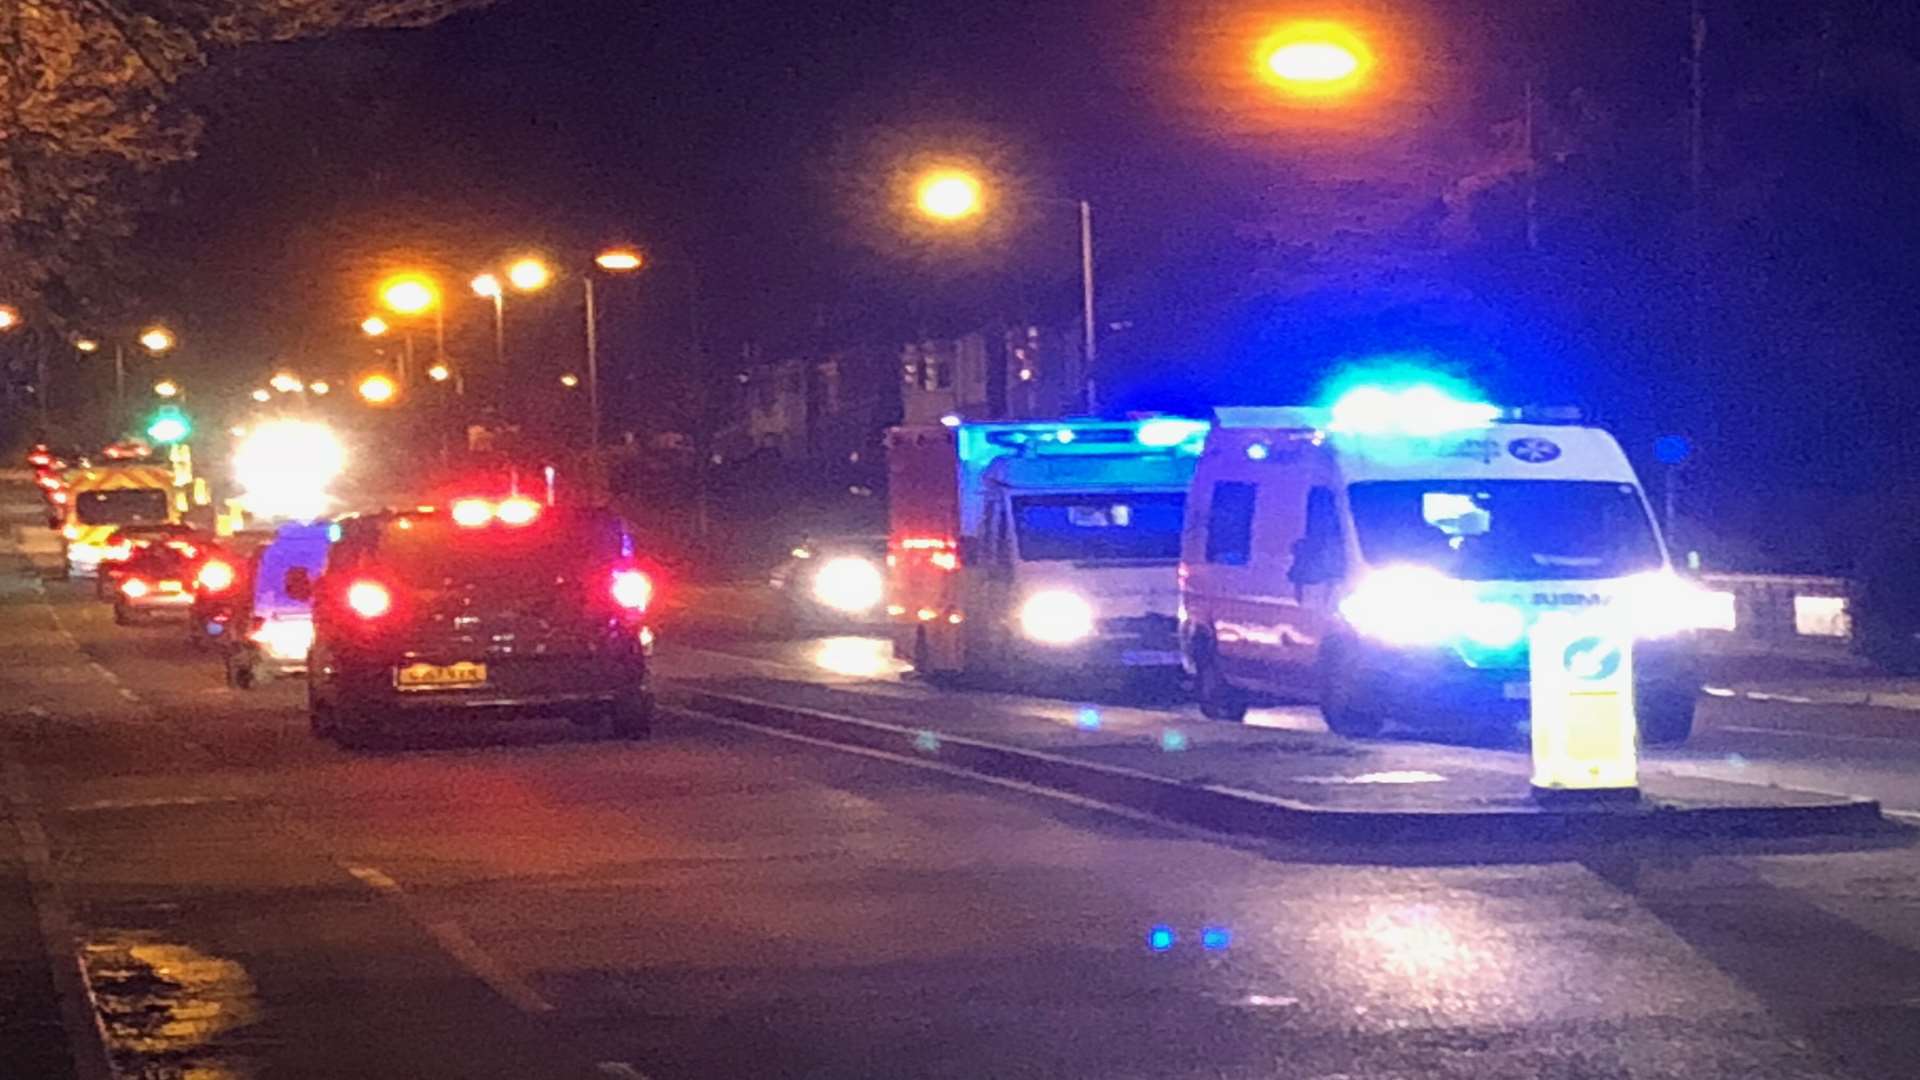 Ambulances at the scene. Picture: Steve Salter